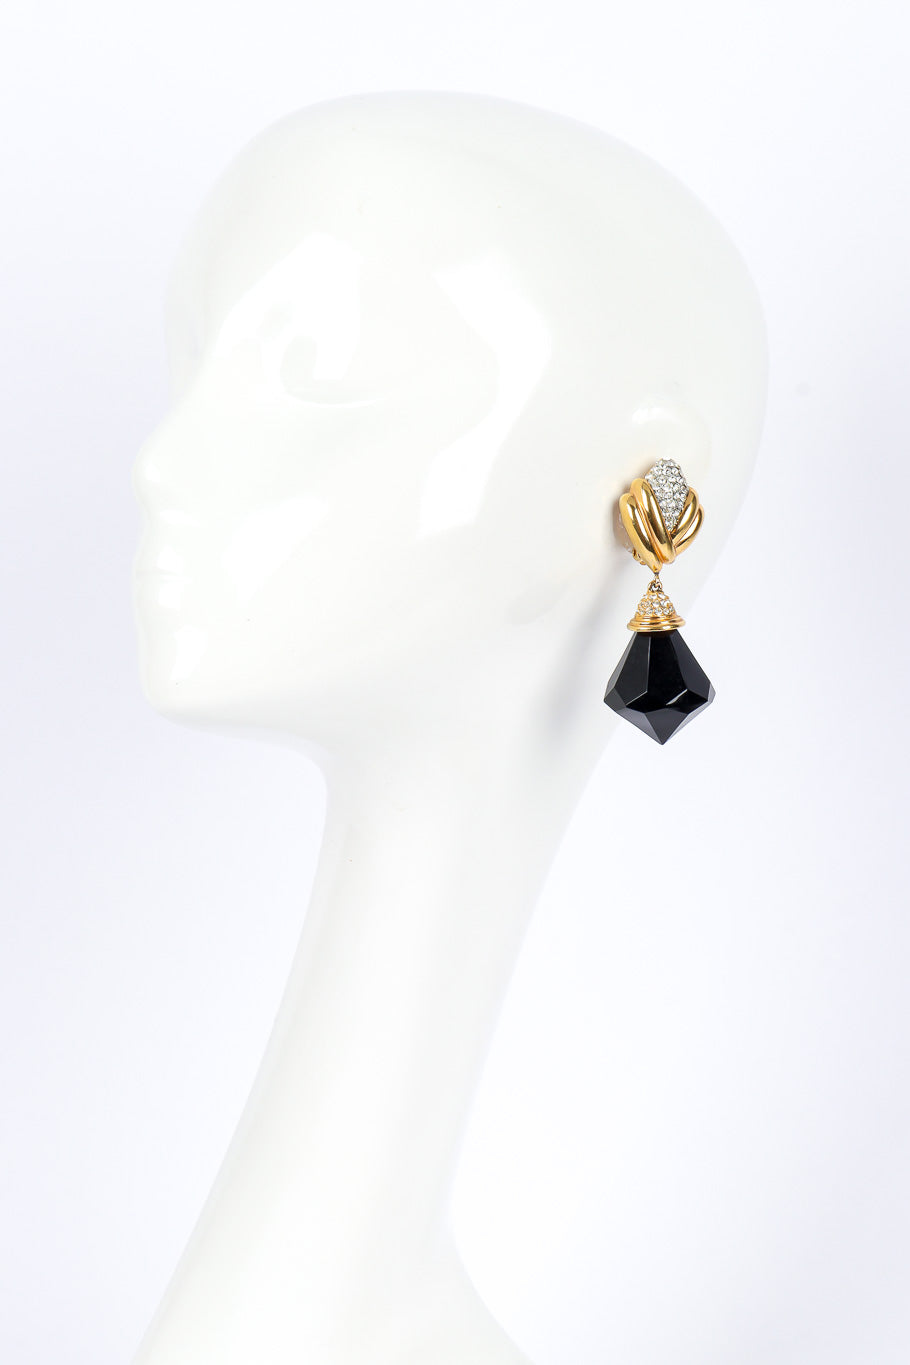  Diamond drop earrings by St. John on white background on mannequin @recessla